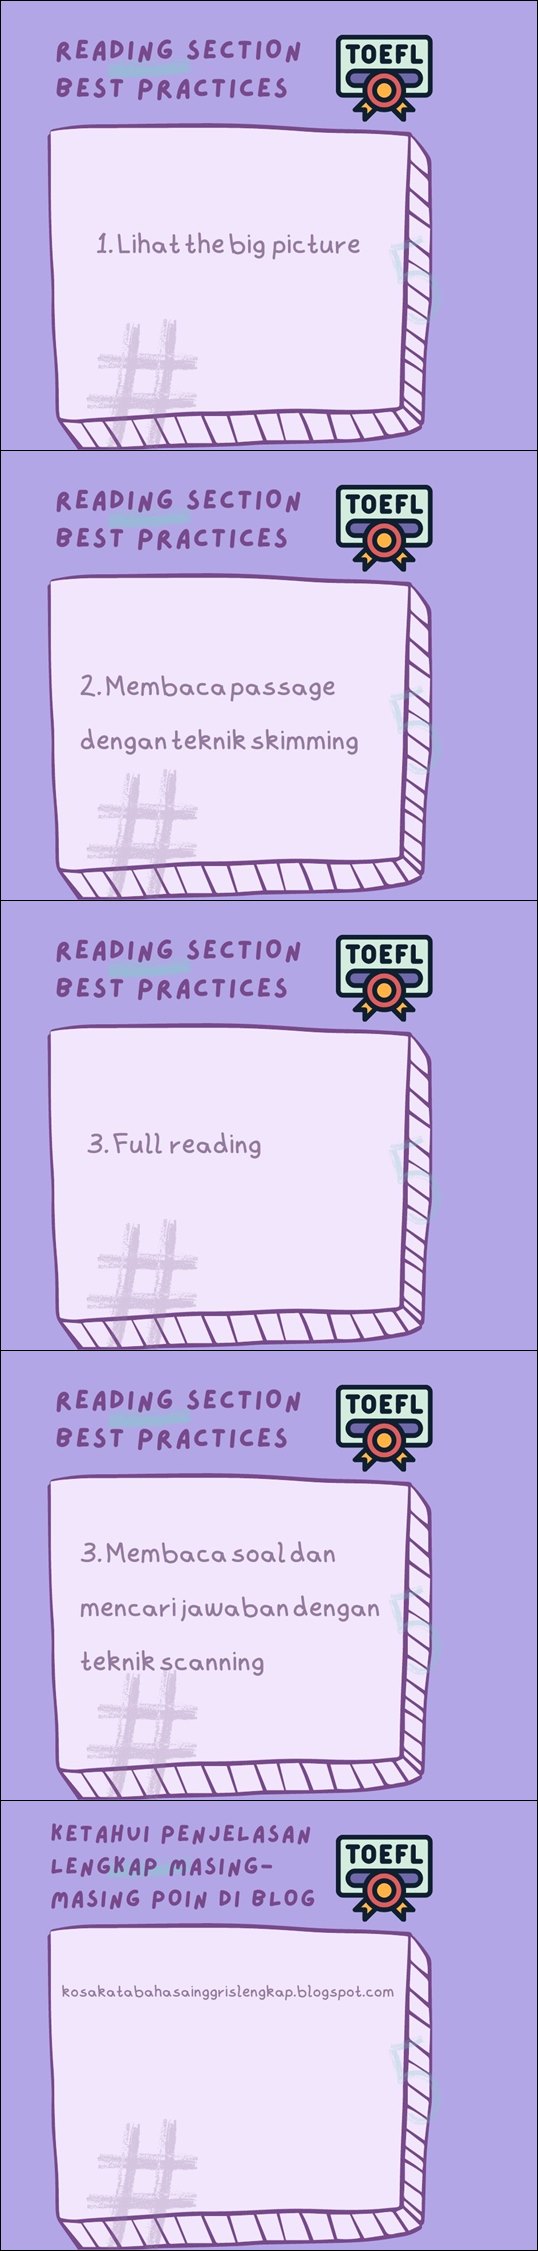 tips cara mengerjakan soal reading section toefl